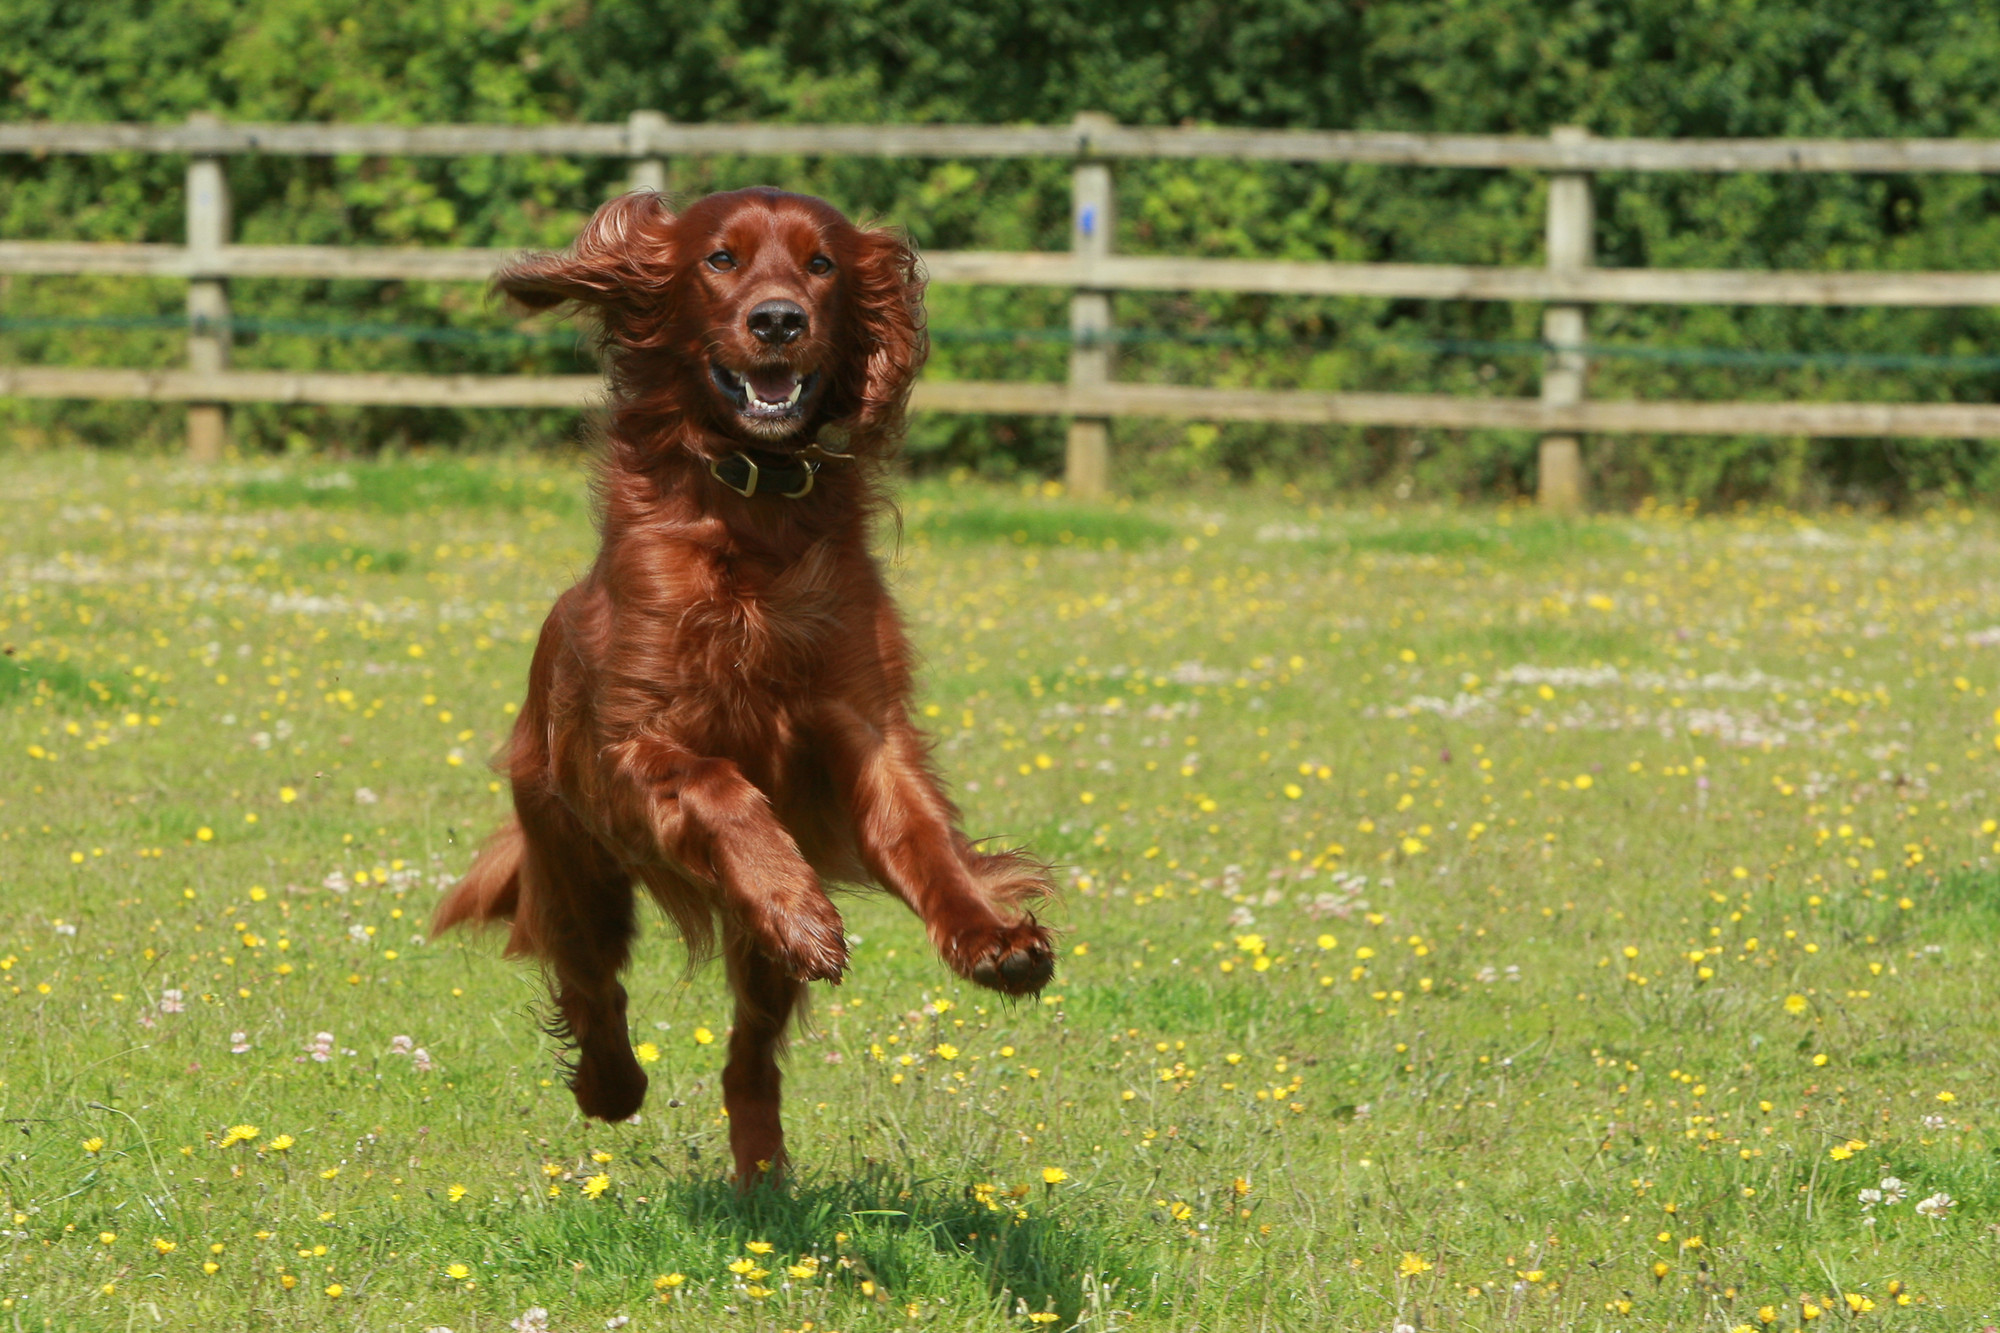 Irish setter dog running through field